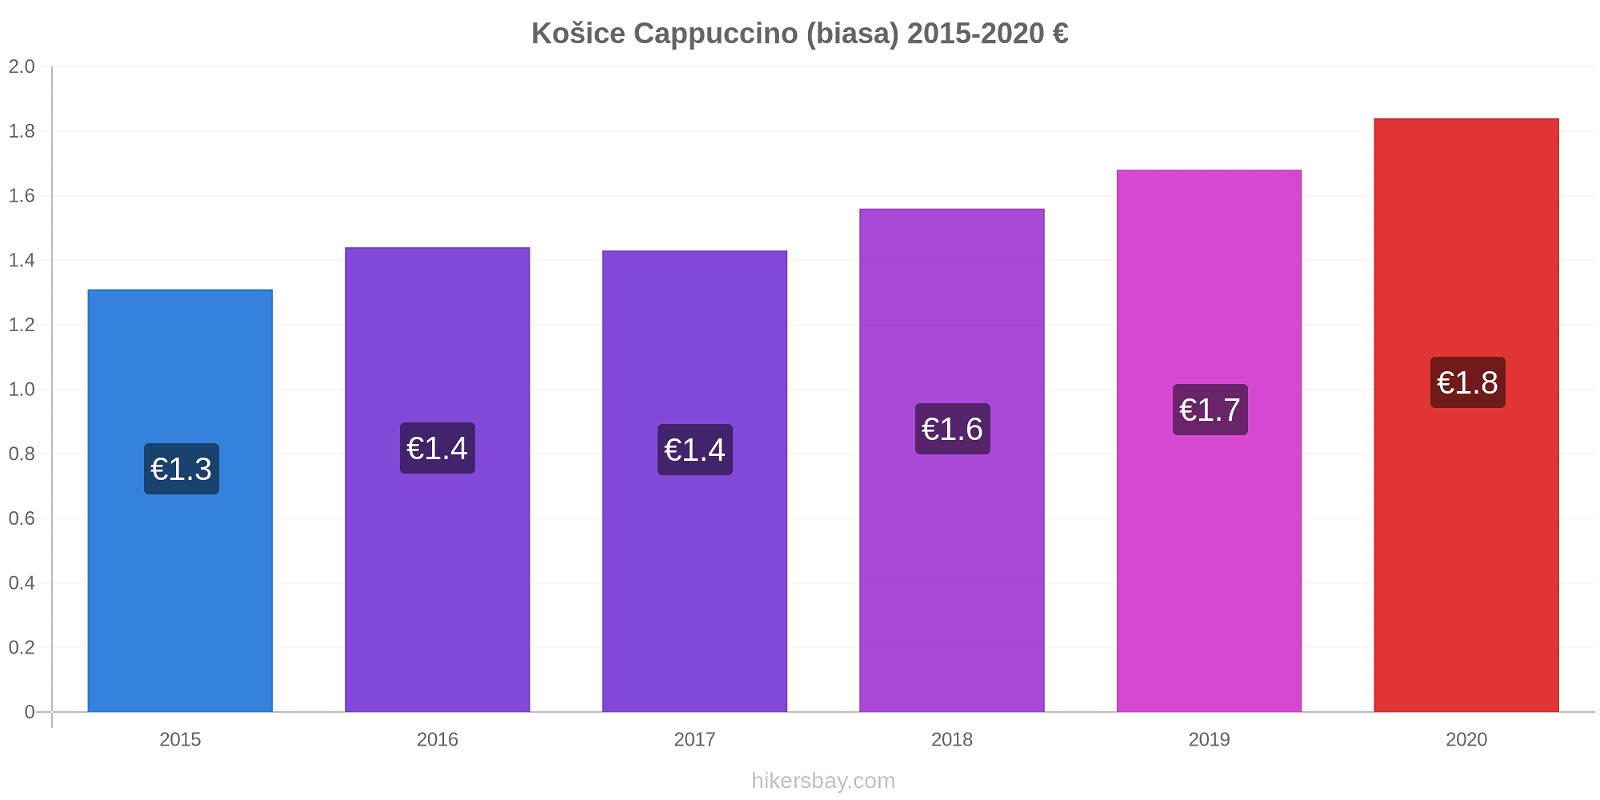 Košice perubahan harga Cappuccino (biasa) hikersbay.com